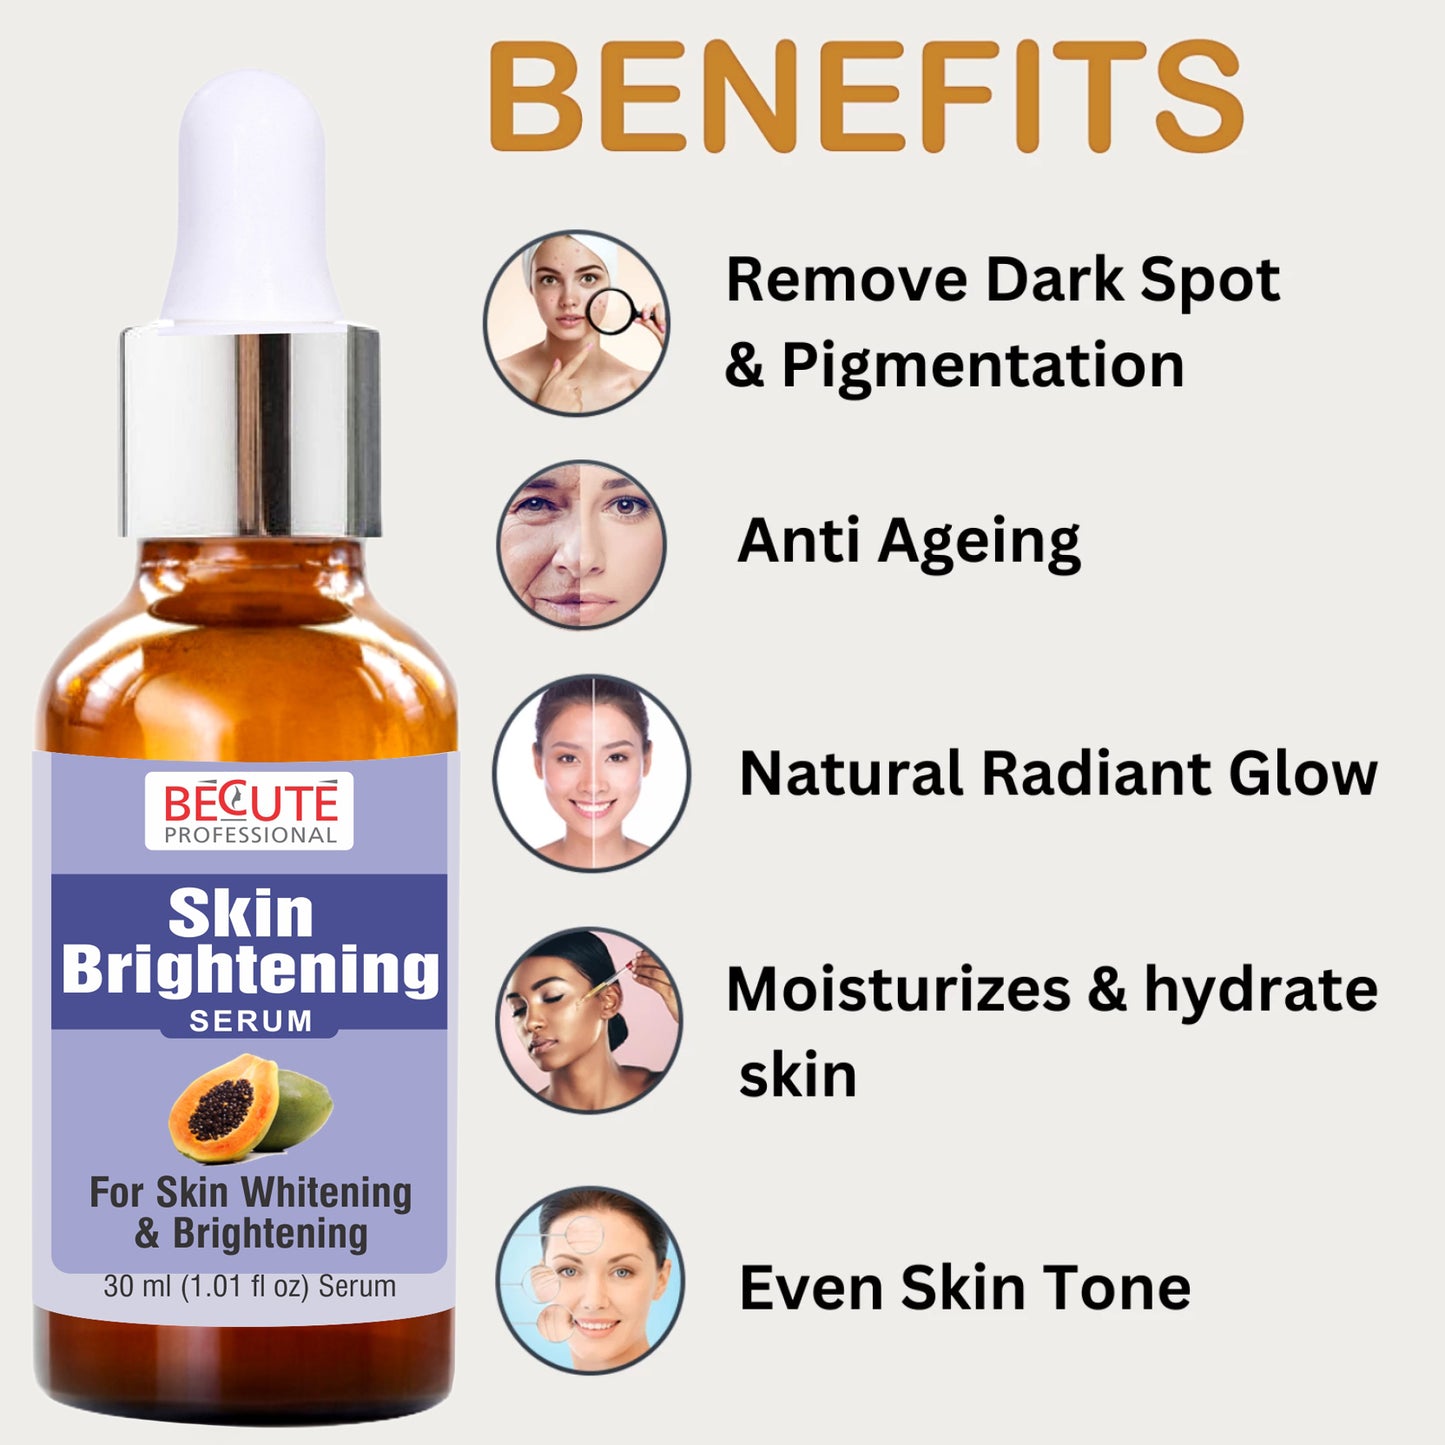 BECUTE Professional® Skin Brightening Serum+2% Salicylic Acid Foaming Face Wash+Moisturising Face Cream - Combo Pack, 230 mL